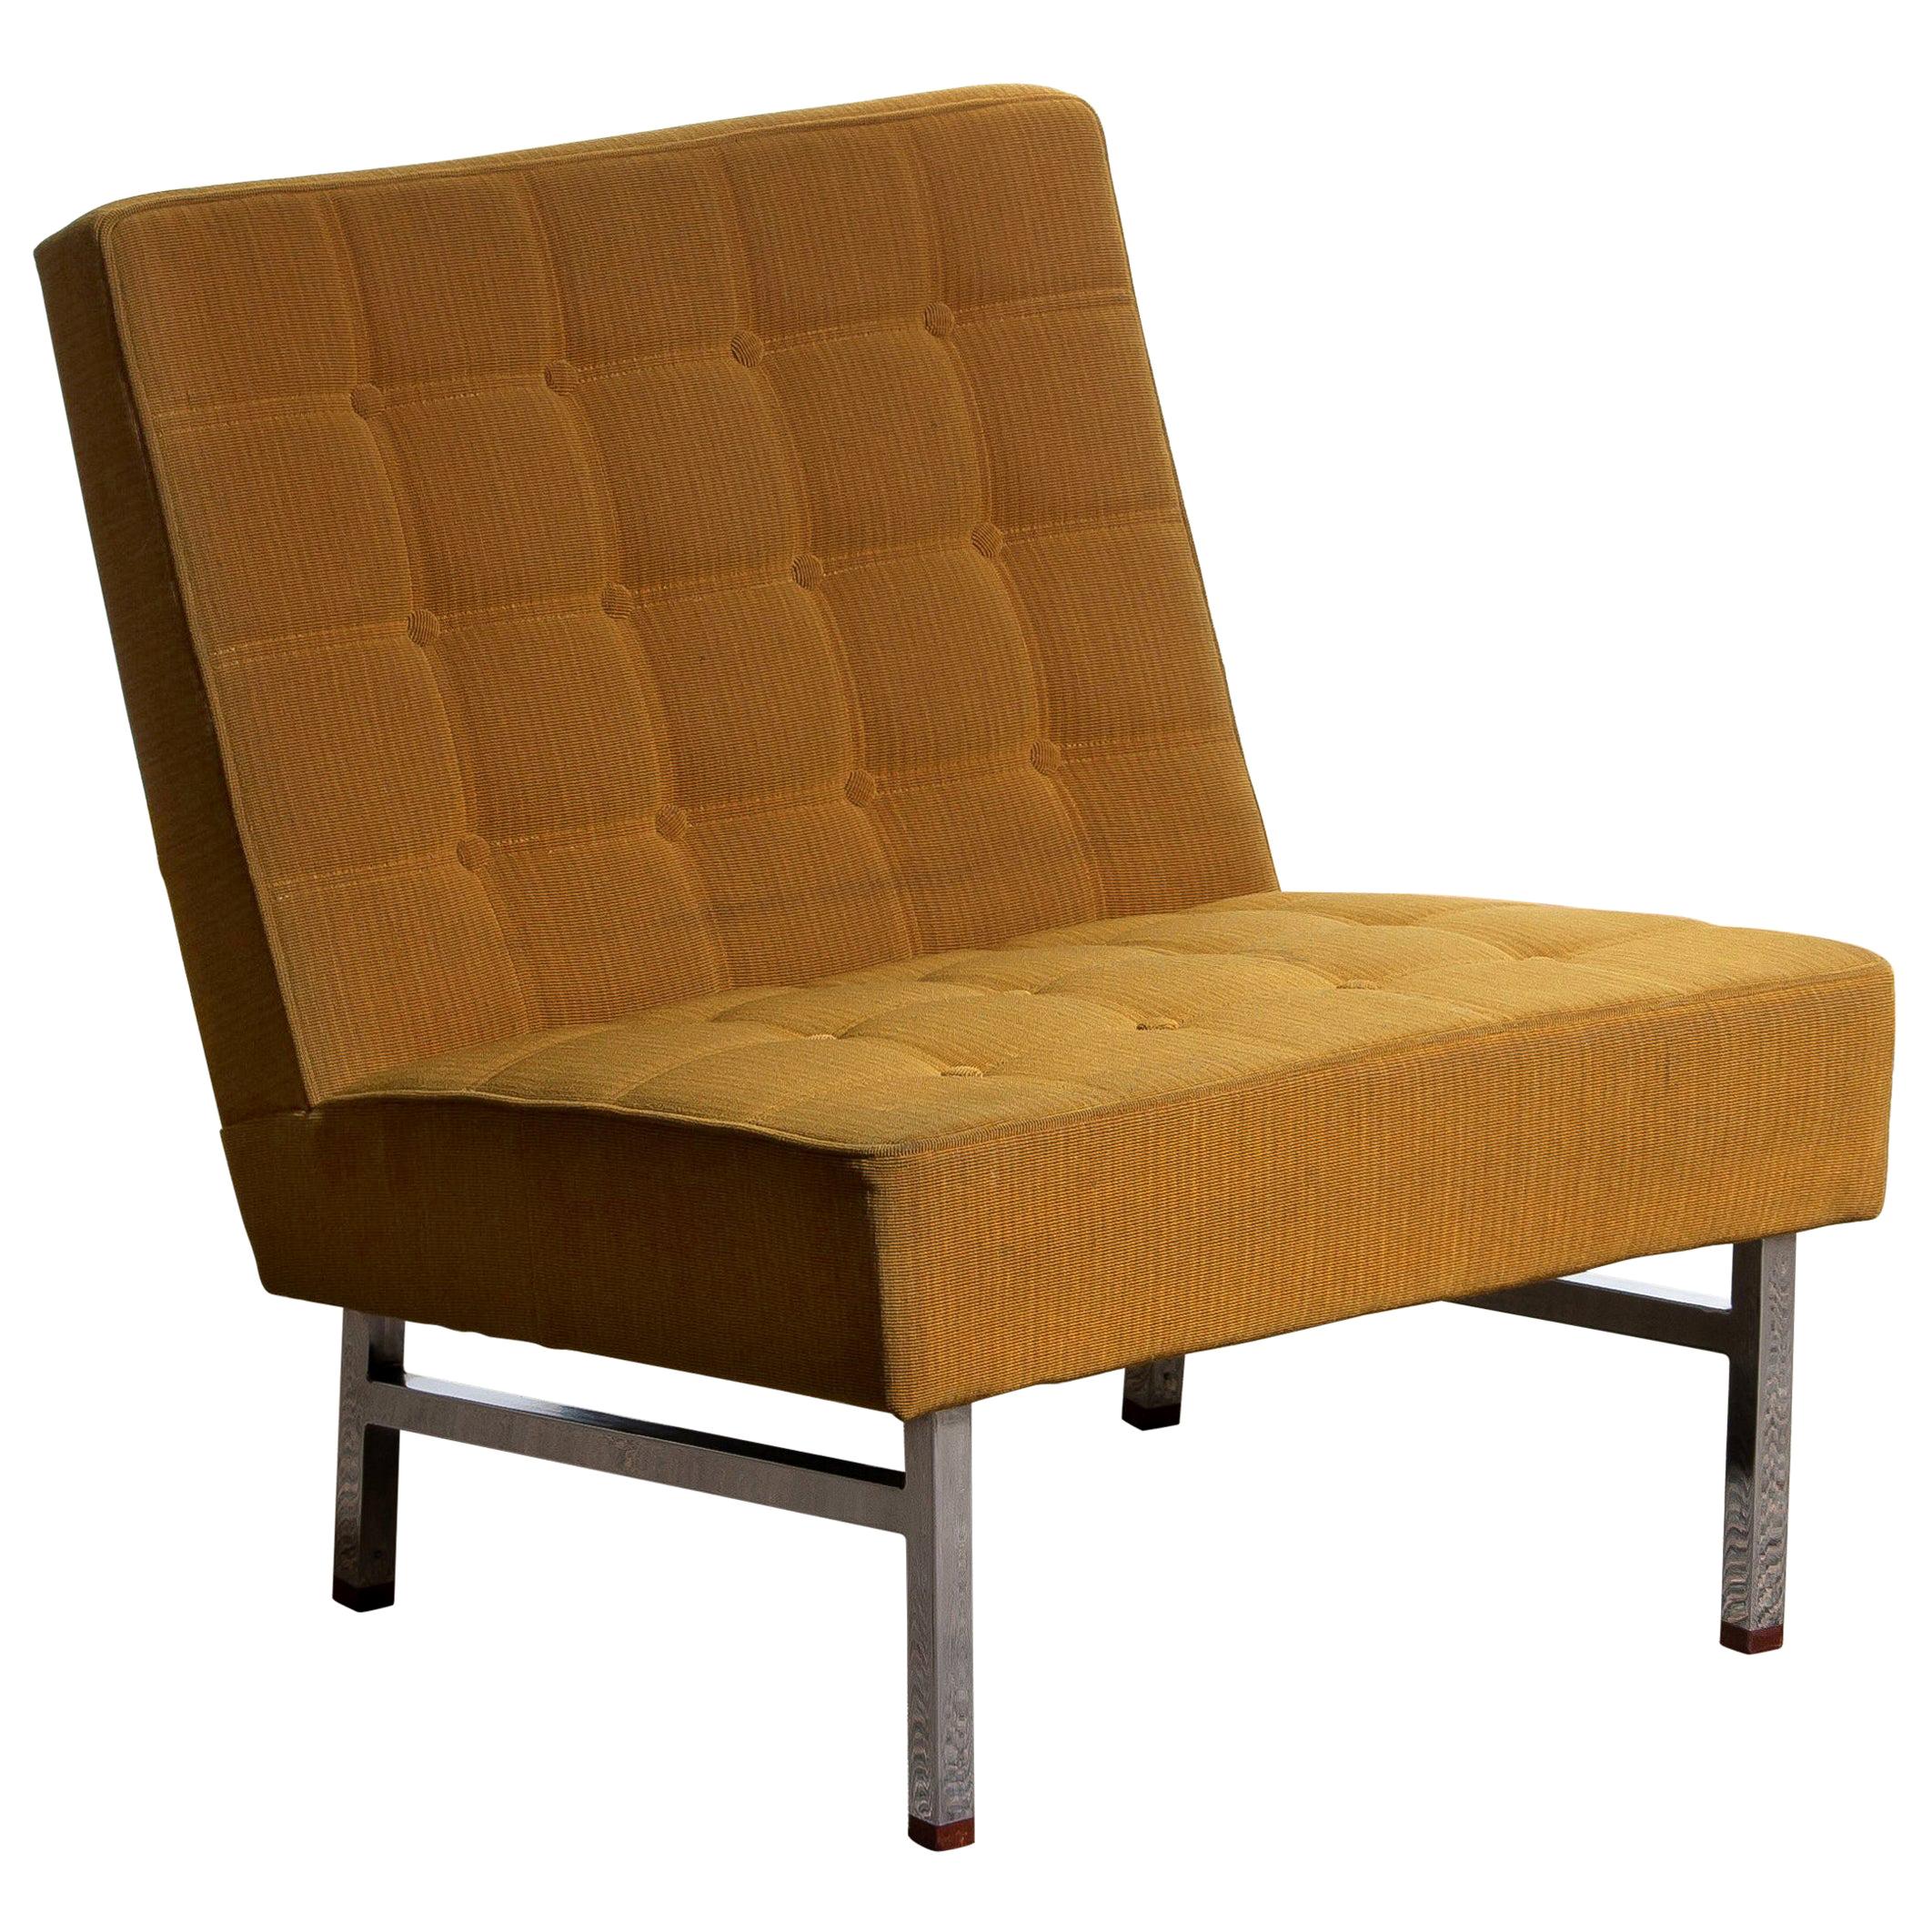 1960s Lounge or Easy Chair by Karl Erik Ekselius for Joc Möbler, Sweden